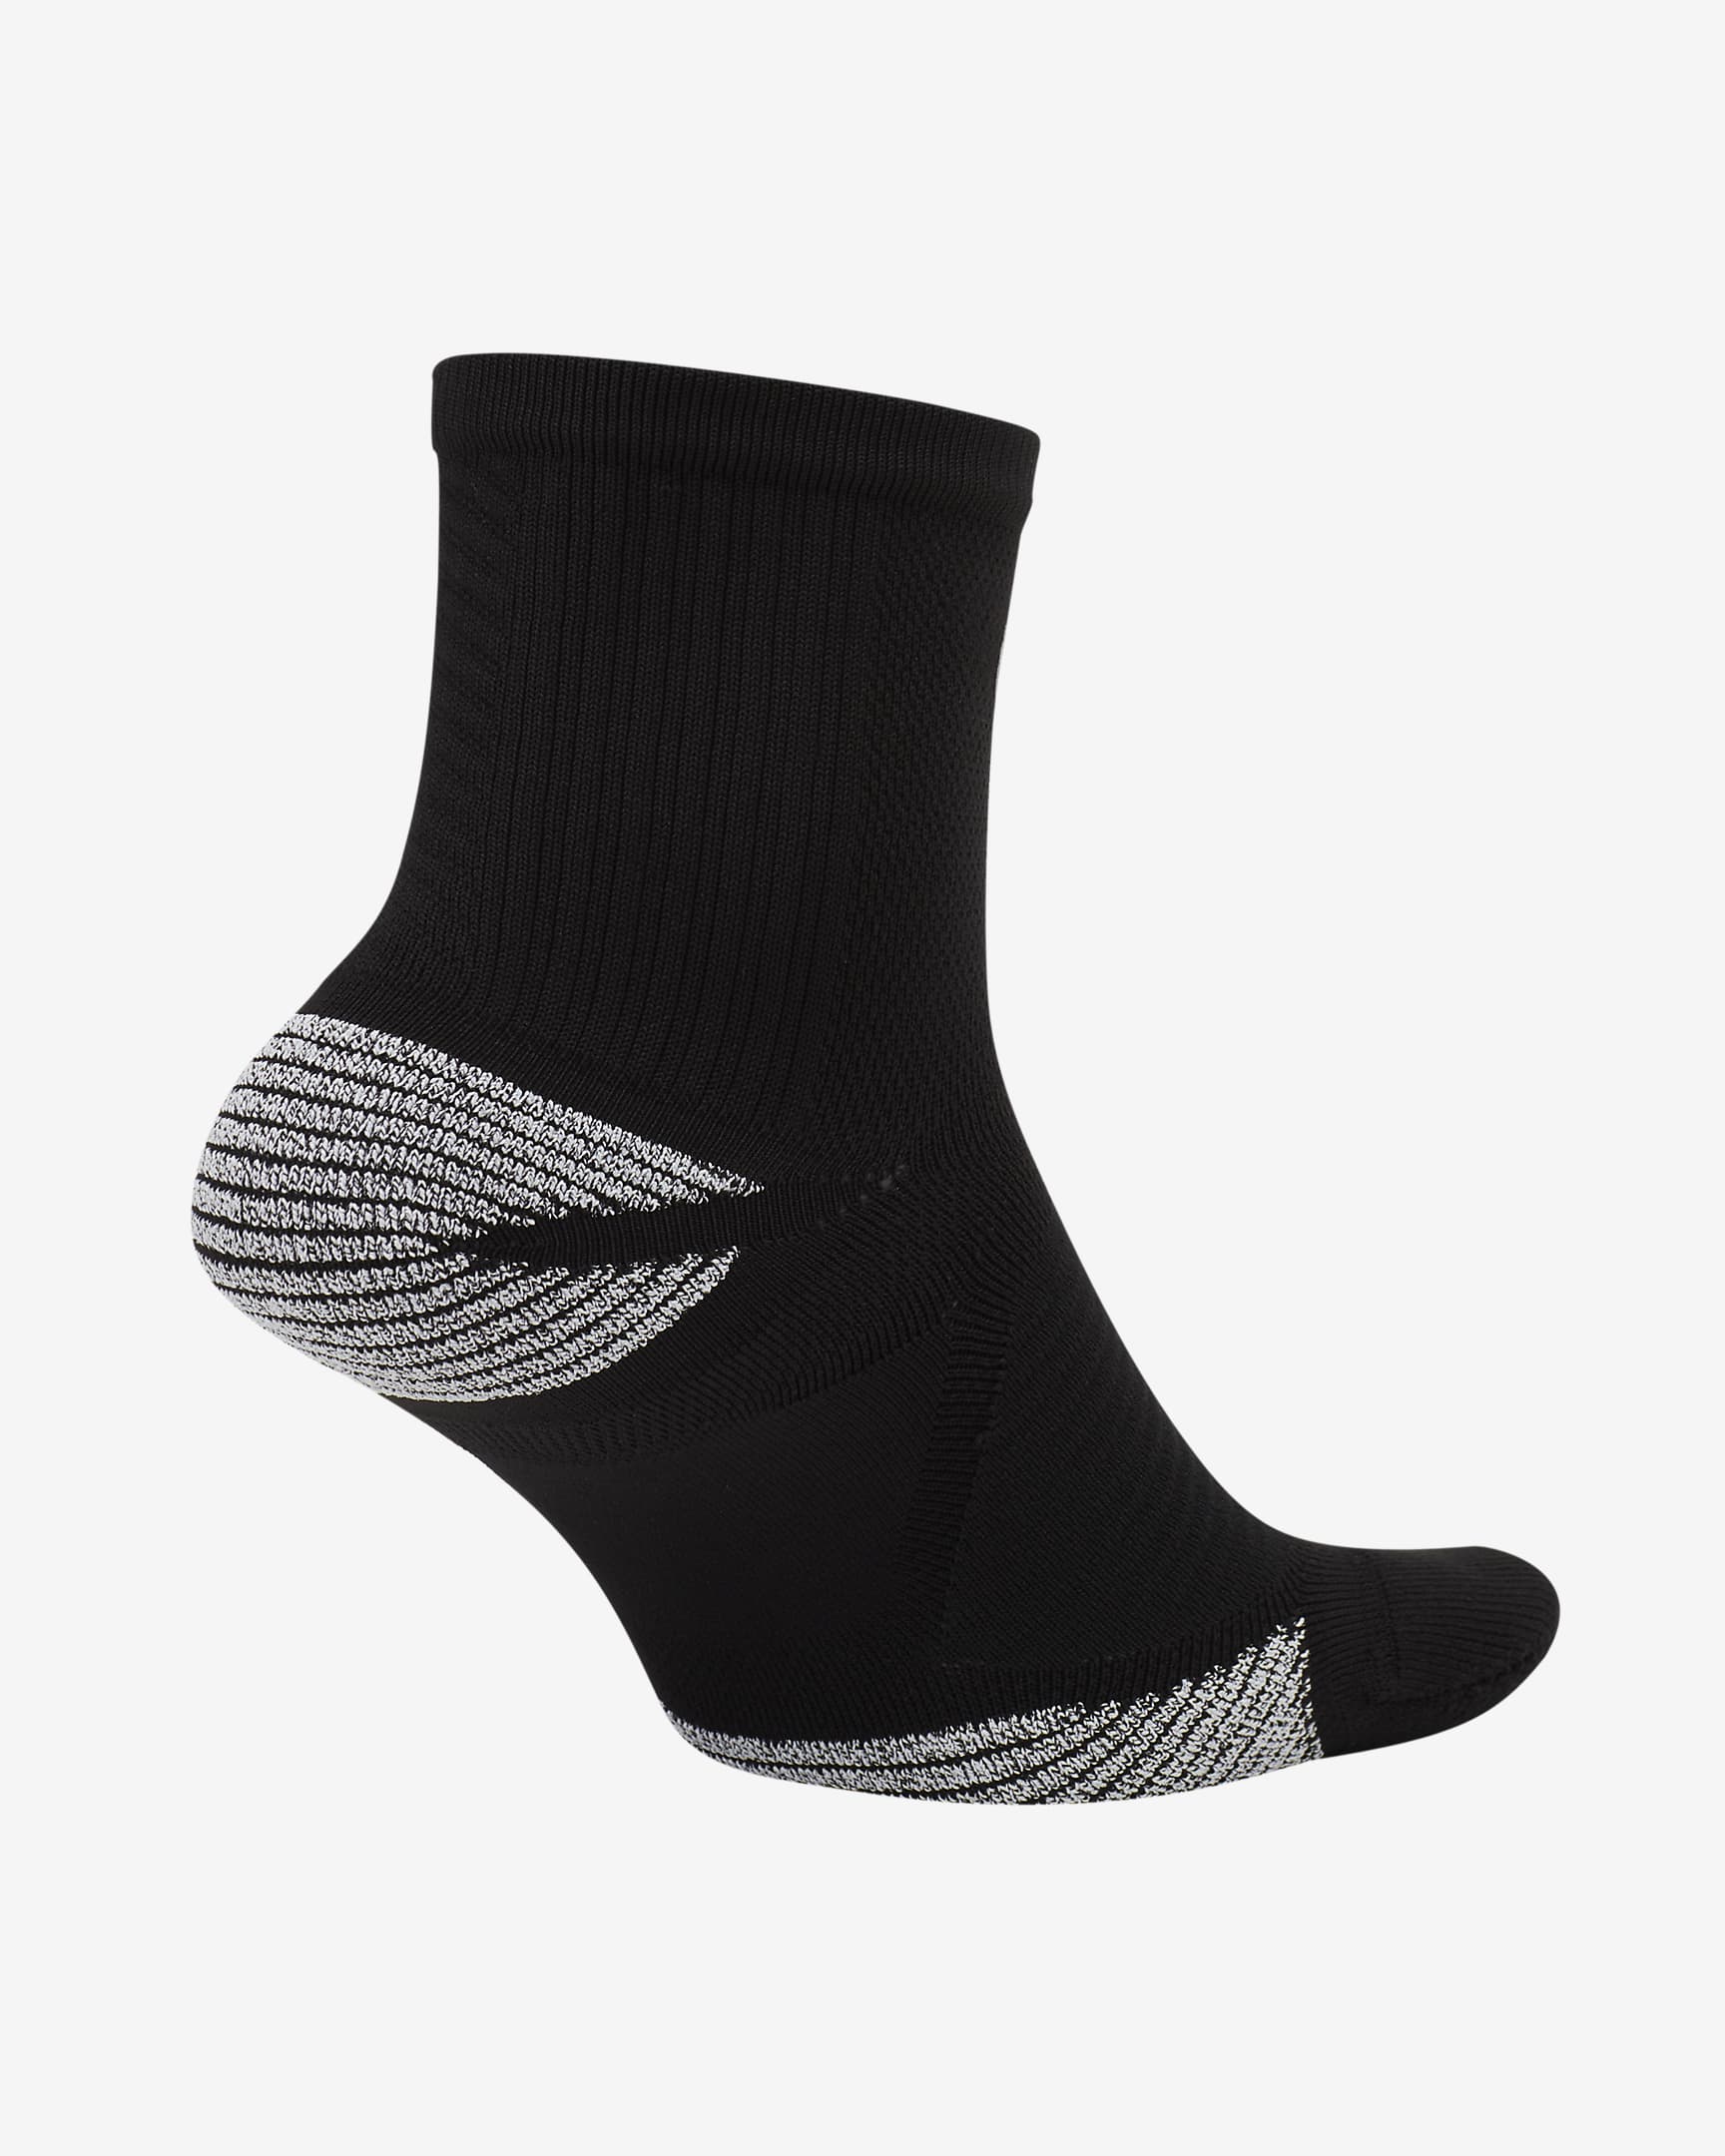 Nike Racing Ankle Socks - Black/Reflect Silver